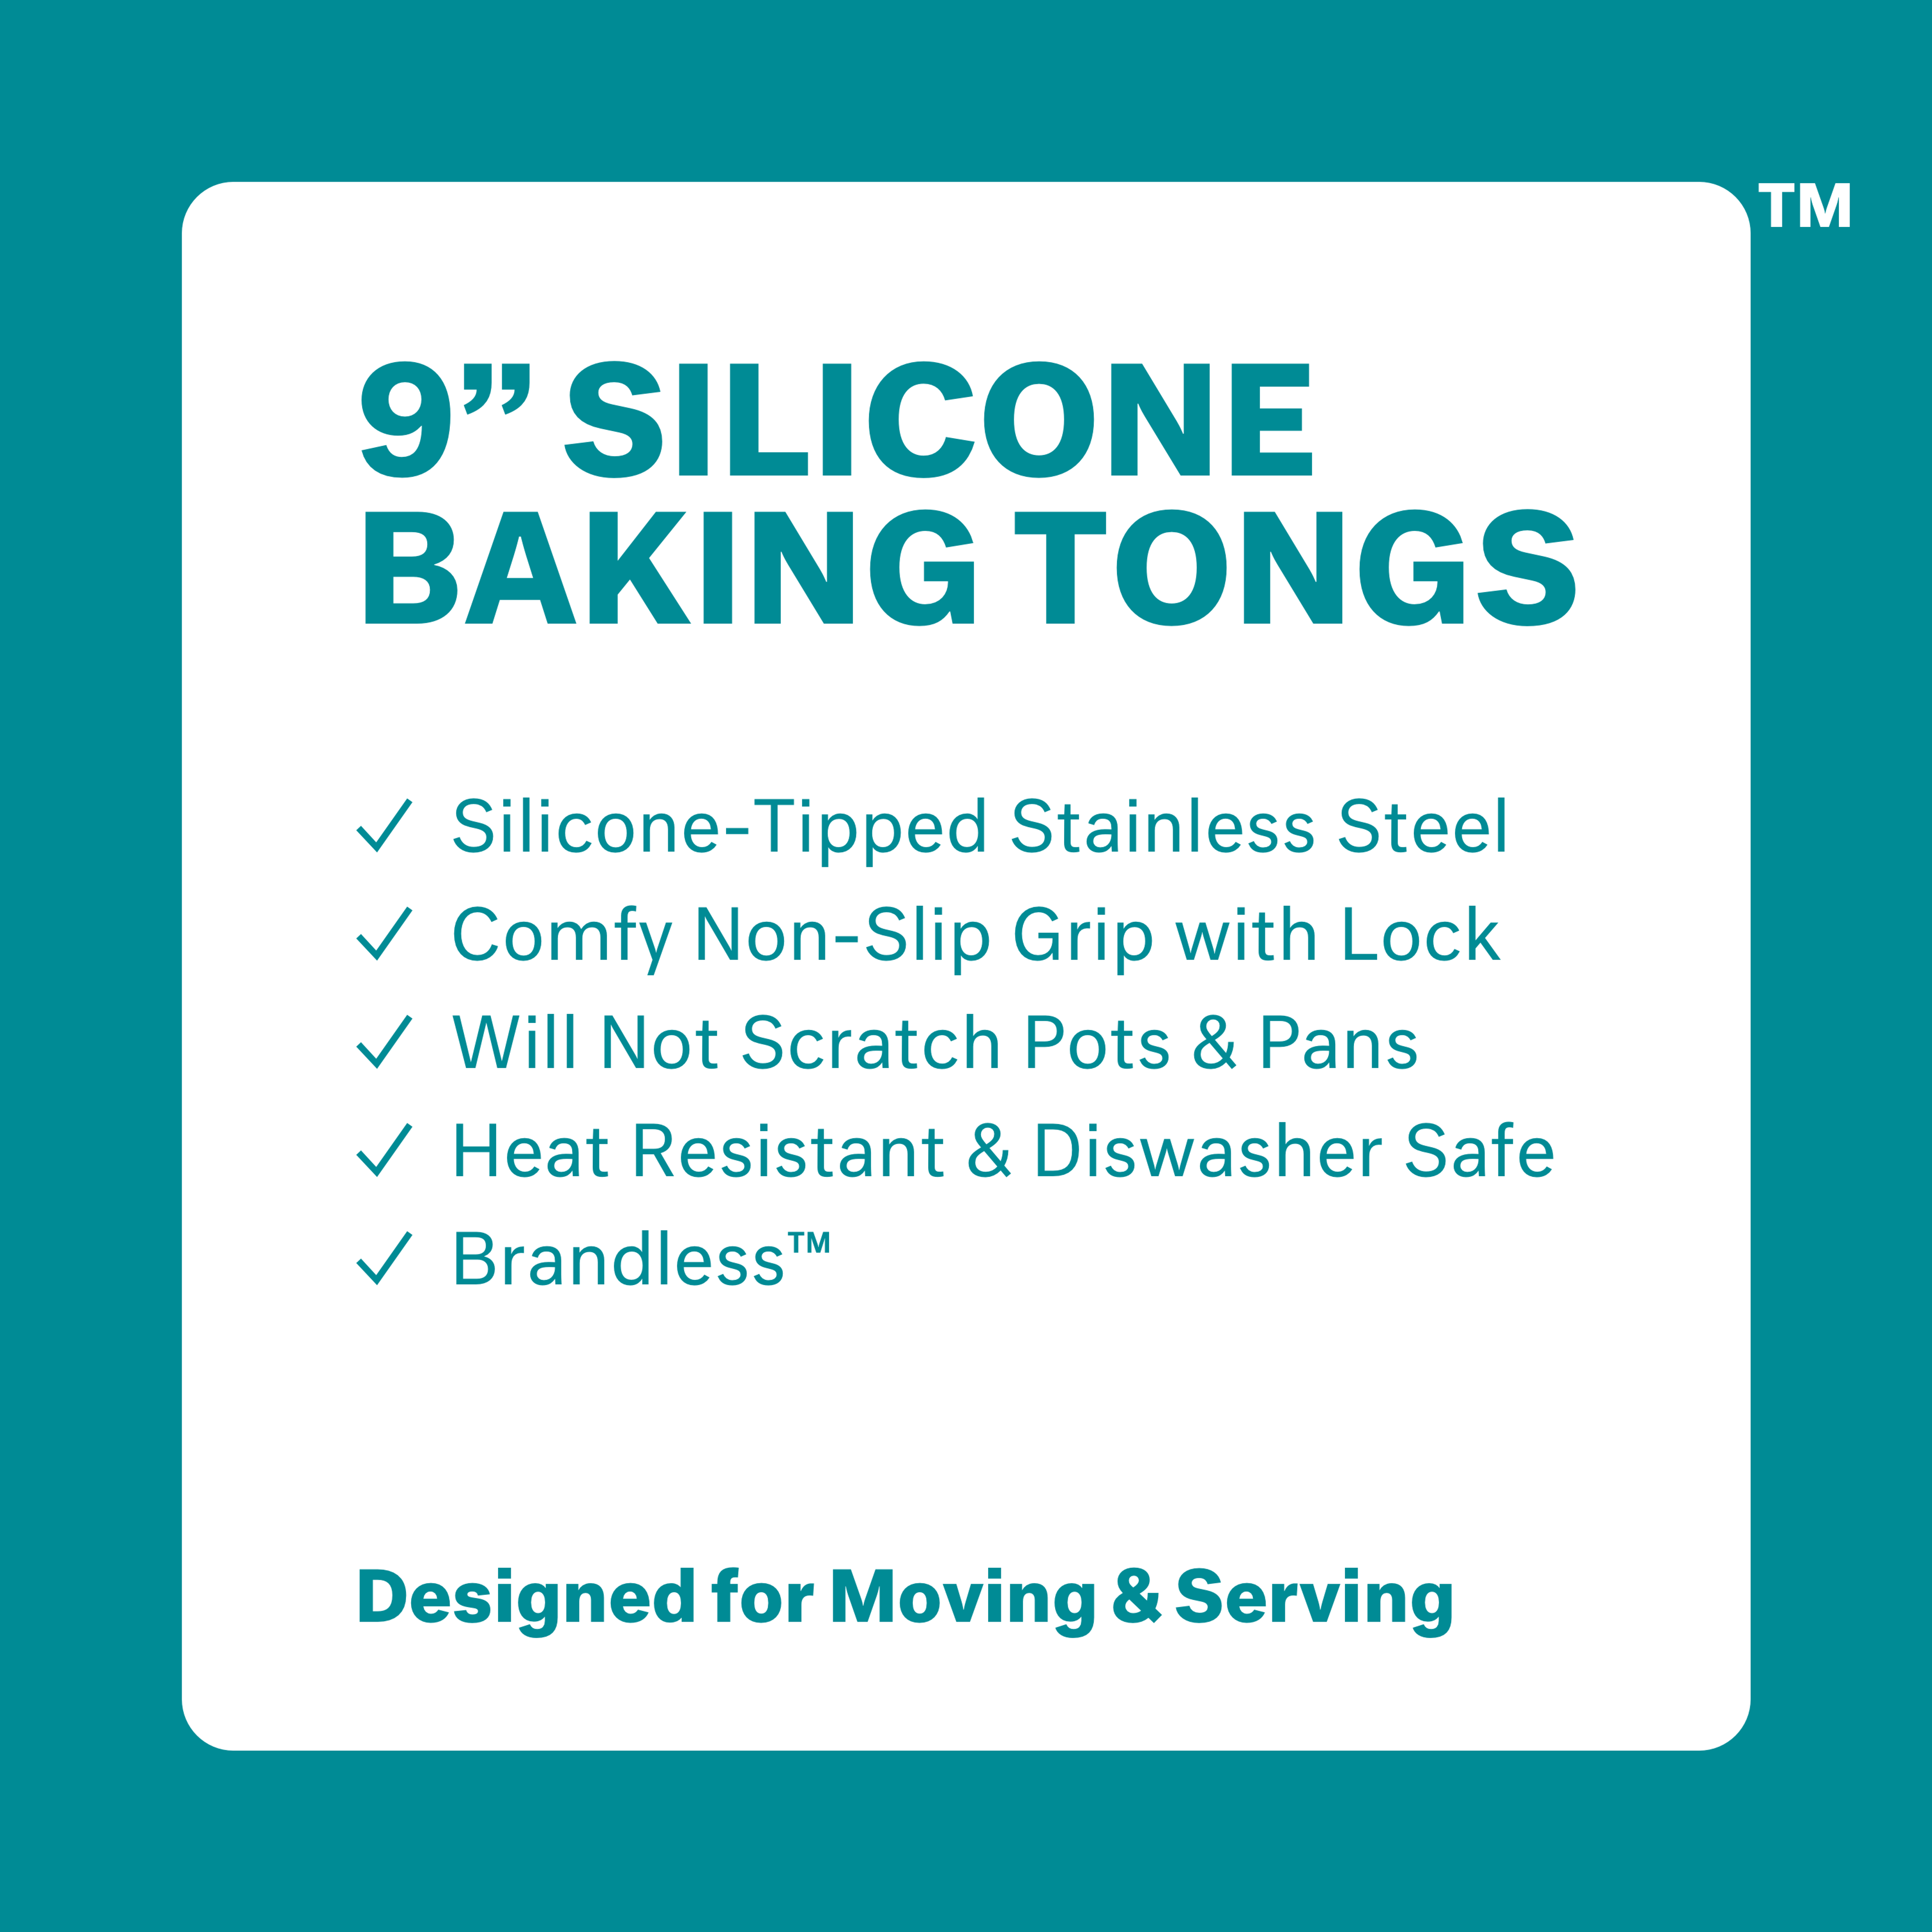 9" Silicone Baking Tongs